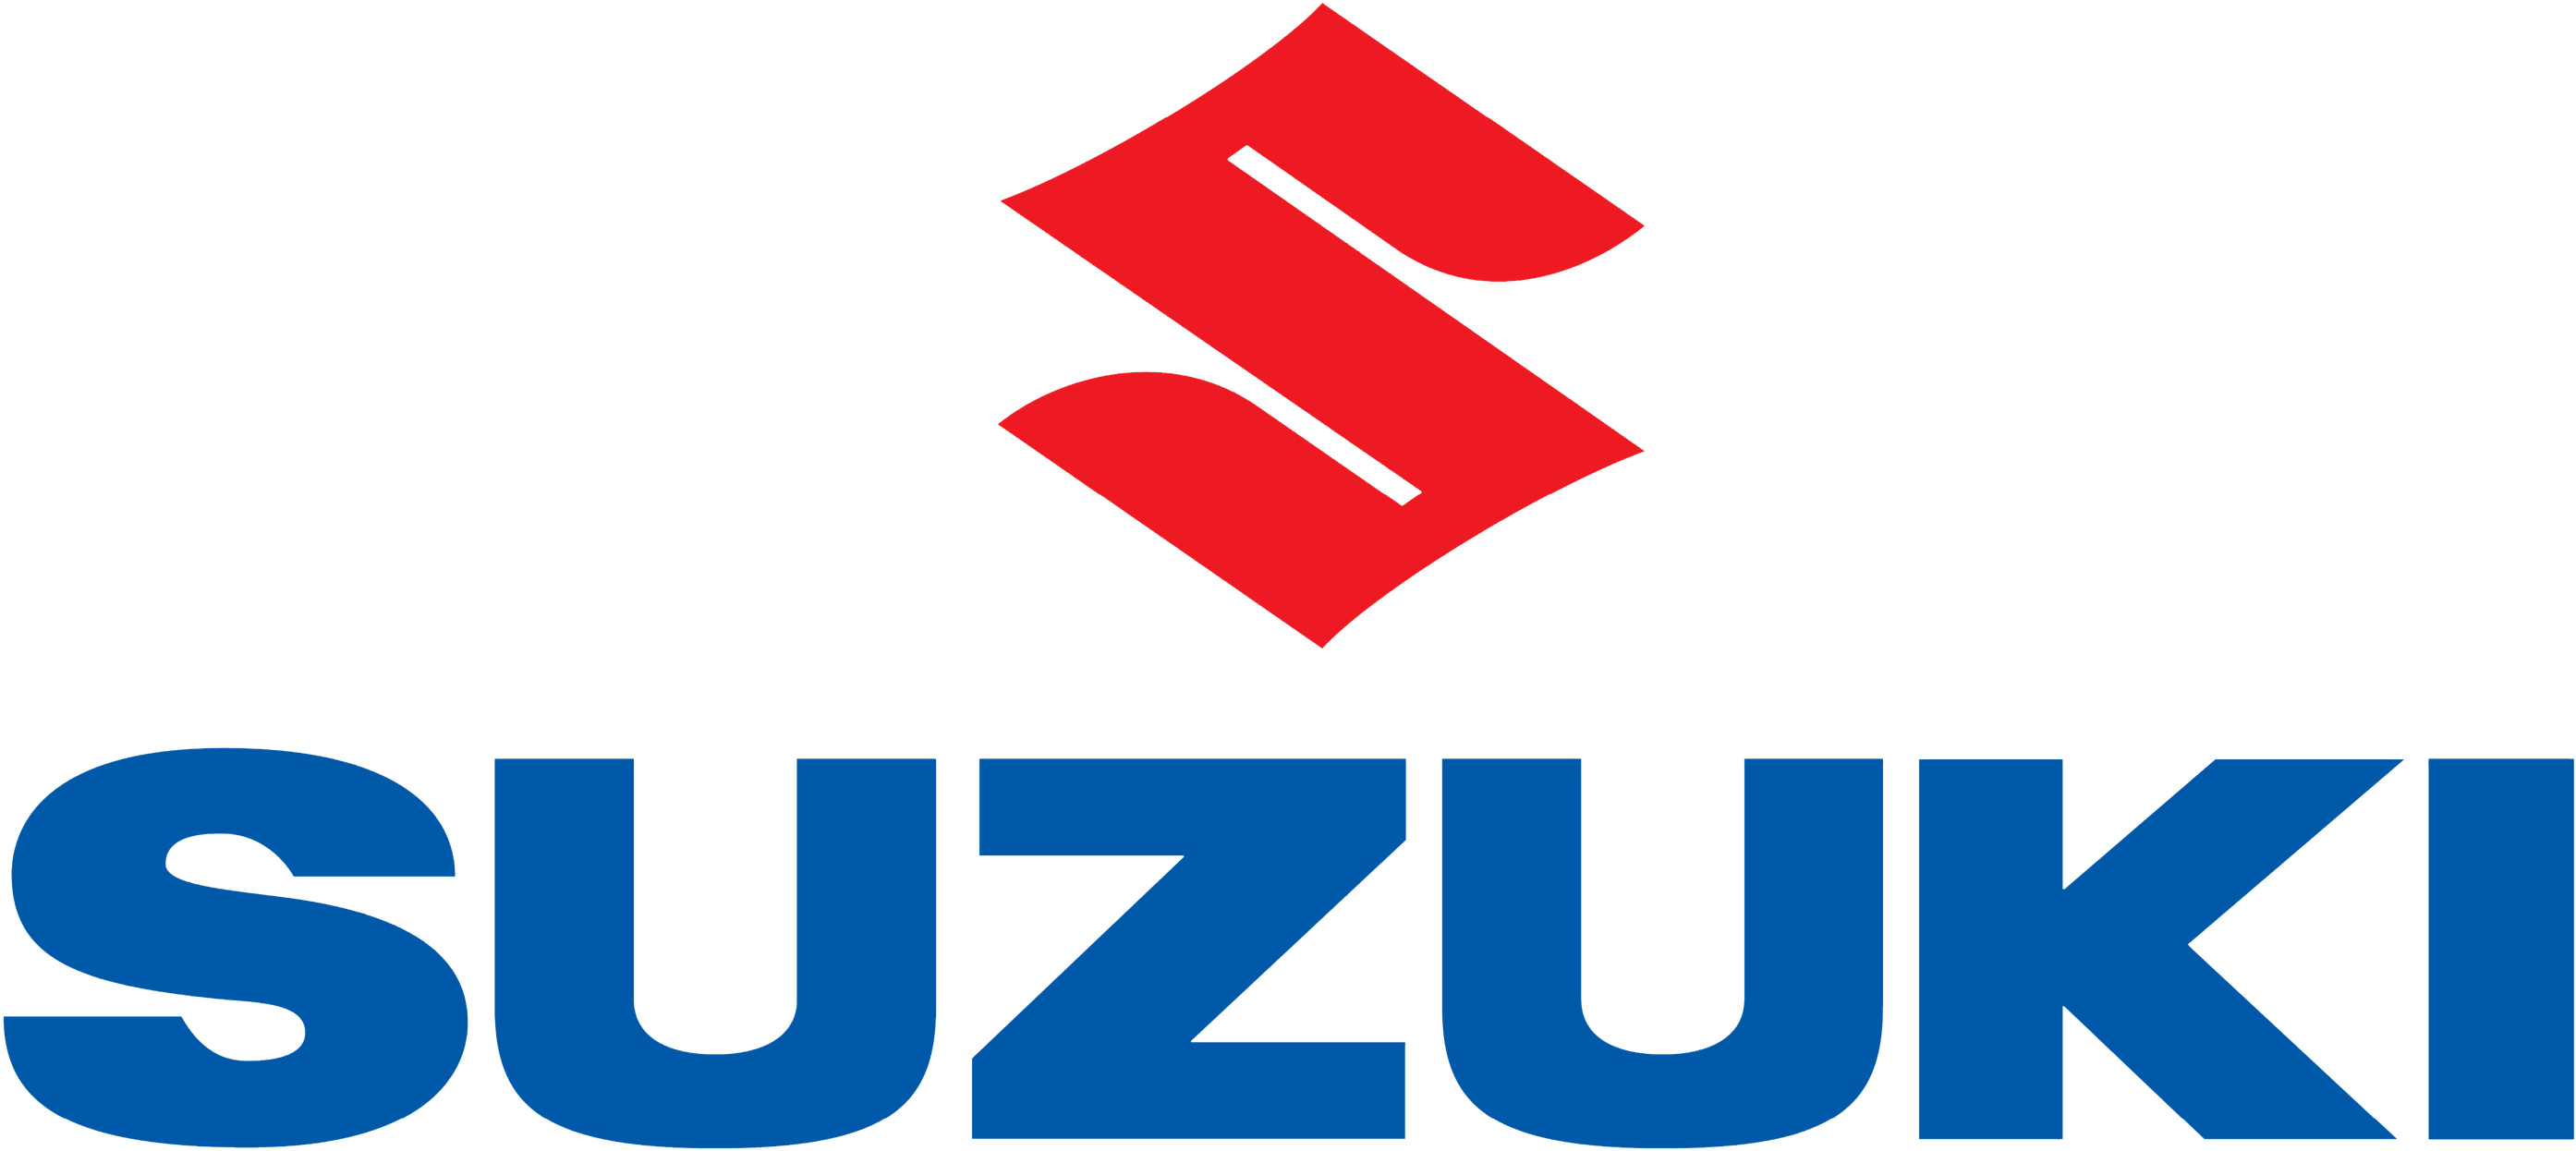 Suzuki logo Transparent PNG